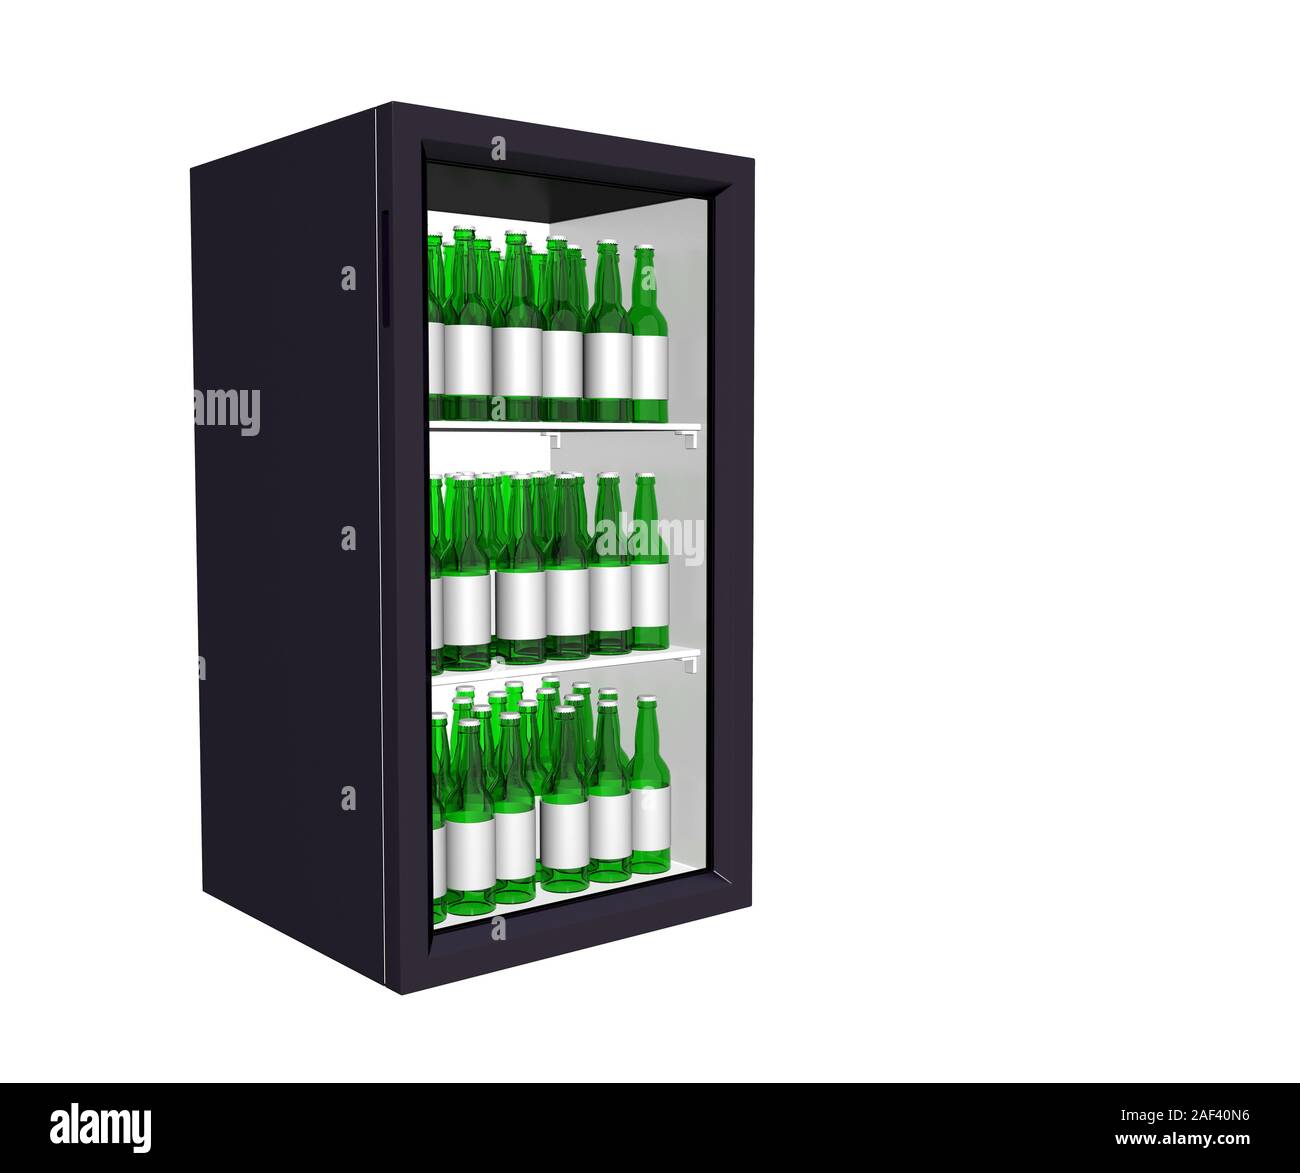 https://c8.alamy.com/compfr/2af40n6/3d-rendu-de-l-exposition-du-refrigerateur-de-stockage-de-boissons-2af40n6.jpg